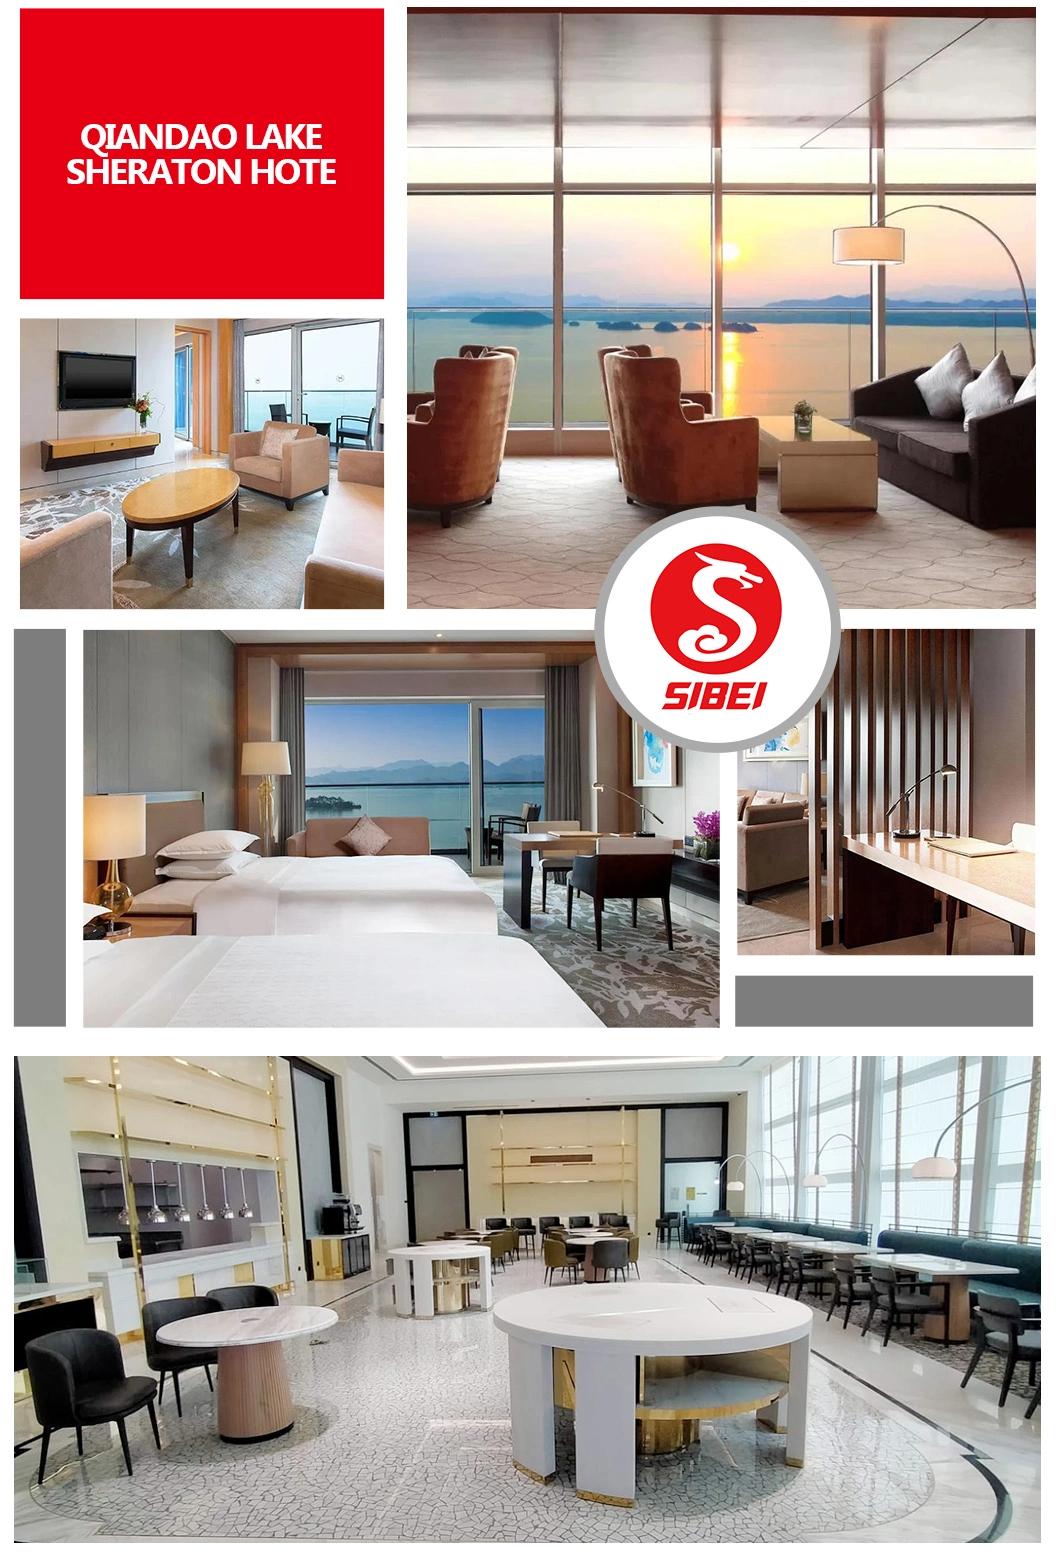 Commercial Wooden Hotel Bedroom Living Room Furniture for 5 Star Hospitality Resort Villa Apartment